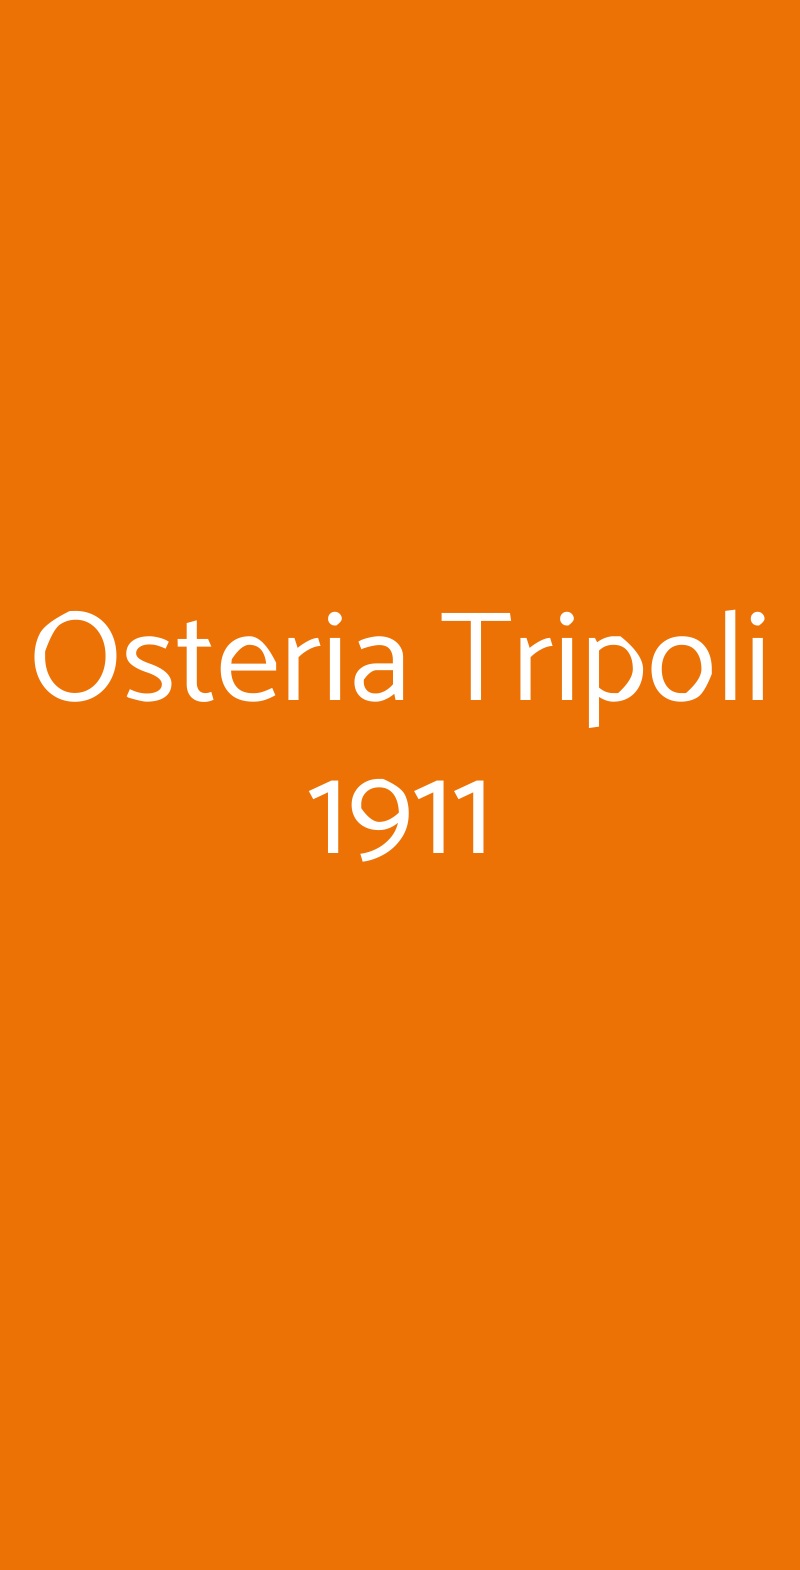 Osteria Tripoli 1911 Mantova menù 1 pagina